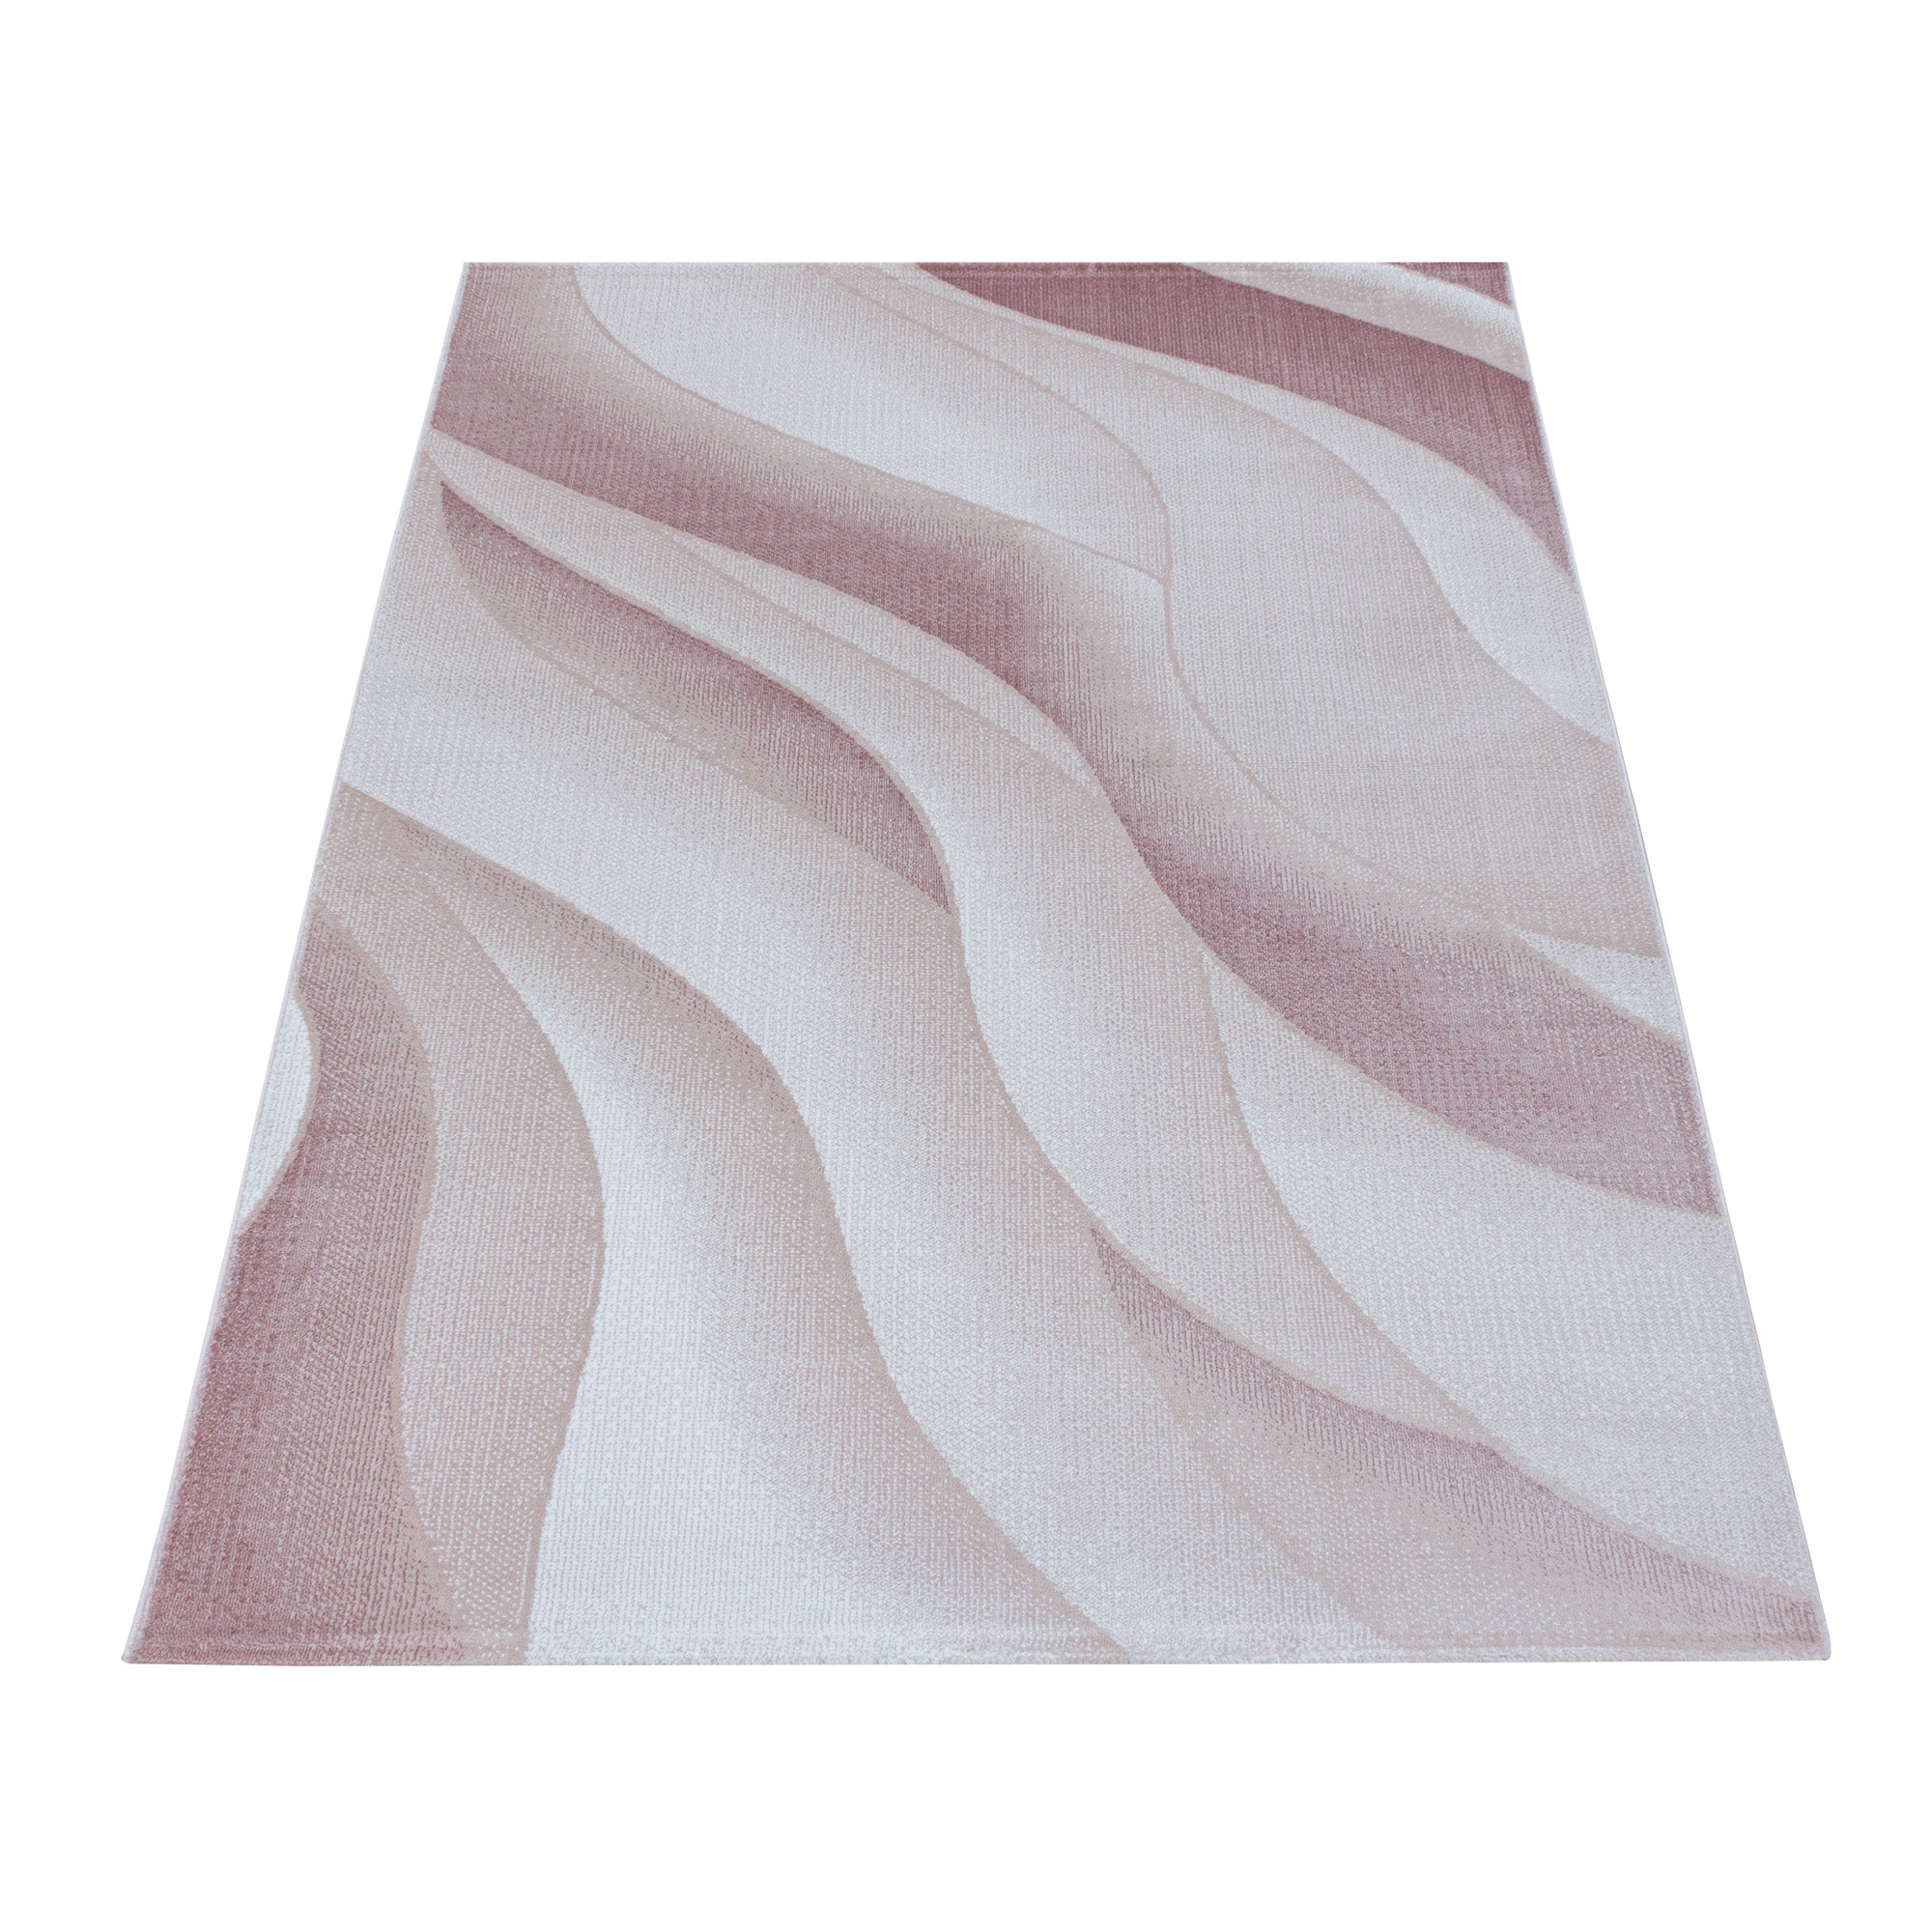 Kurzflor Design Teppich Wohnzimmerteppich 3-D Wellen Muster Soft Flor Pink